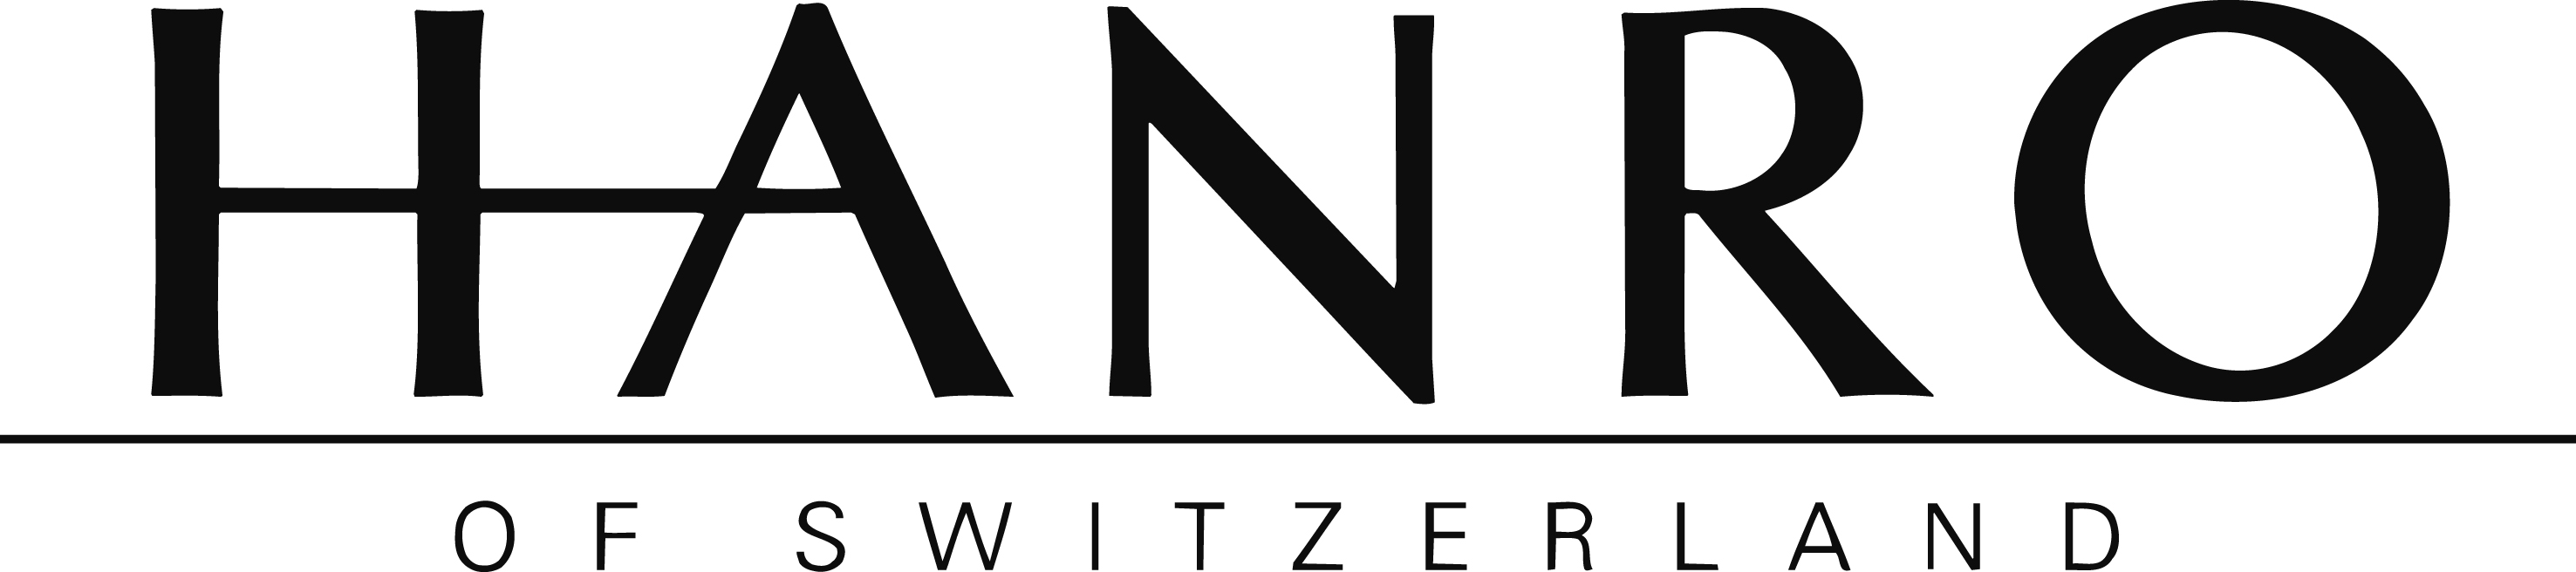 Hanro logo